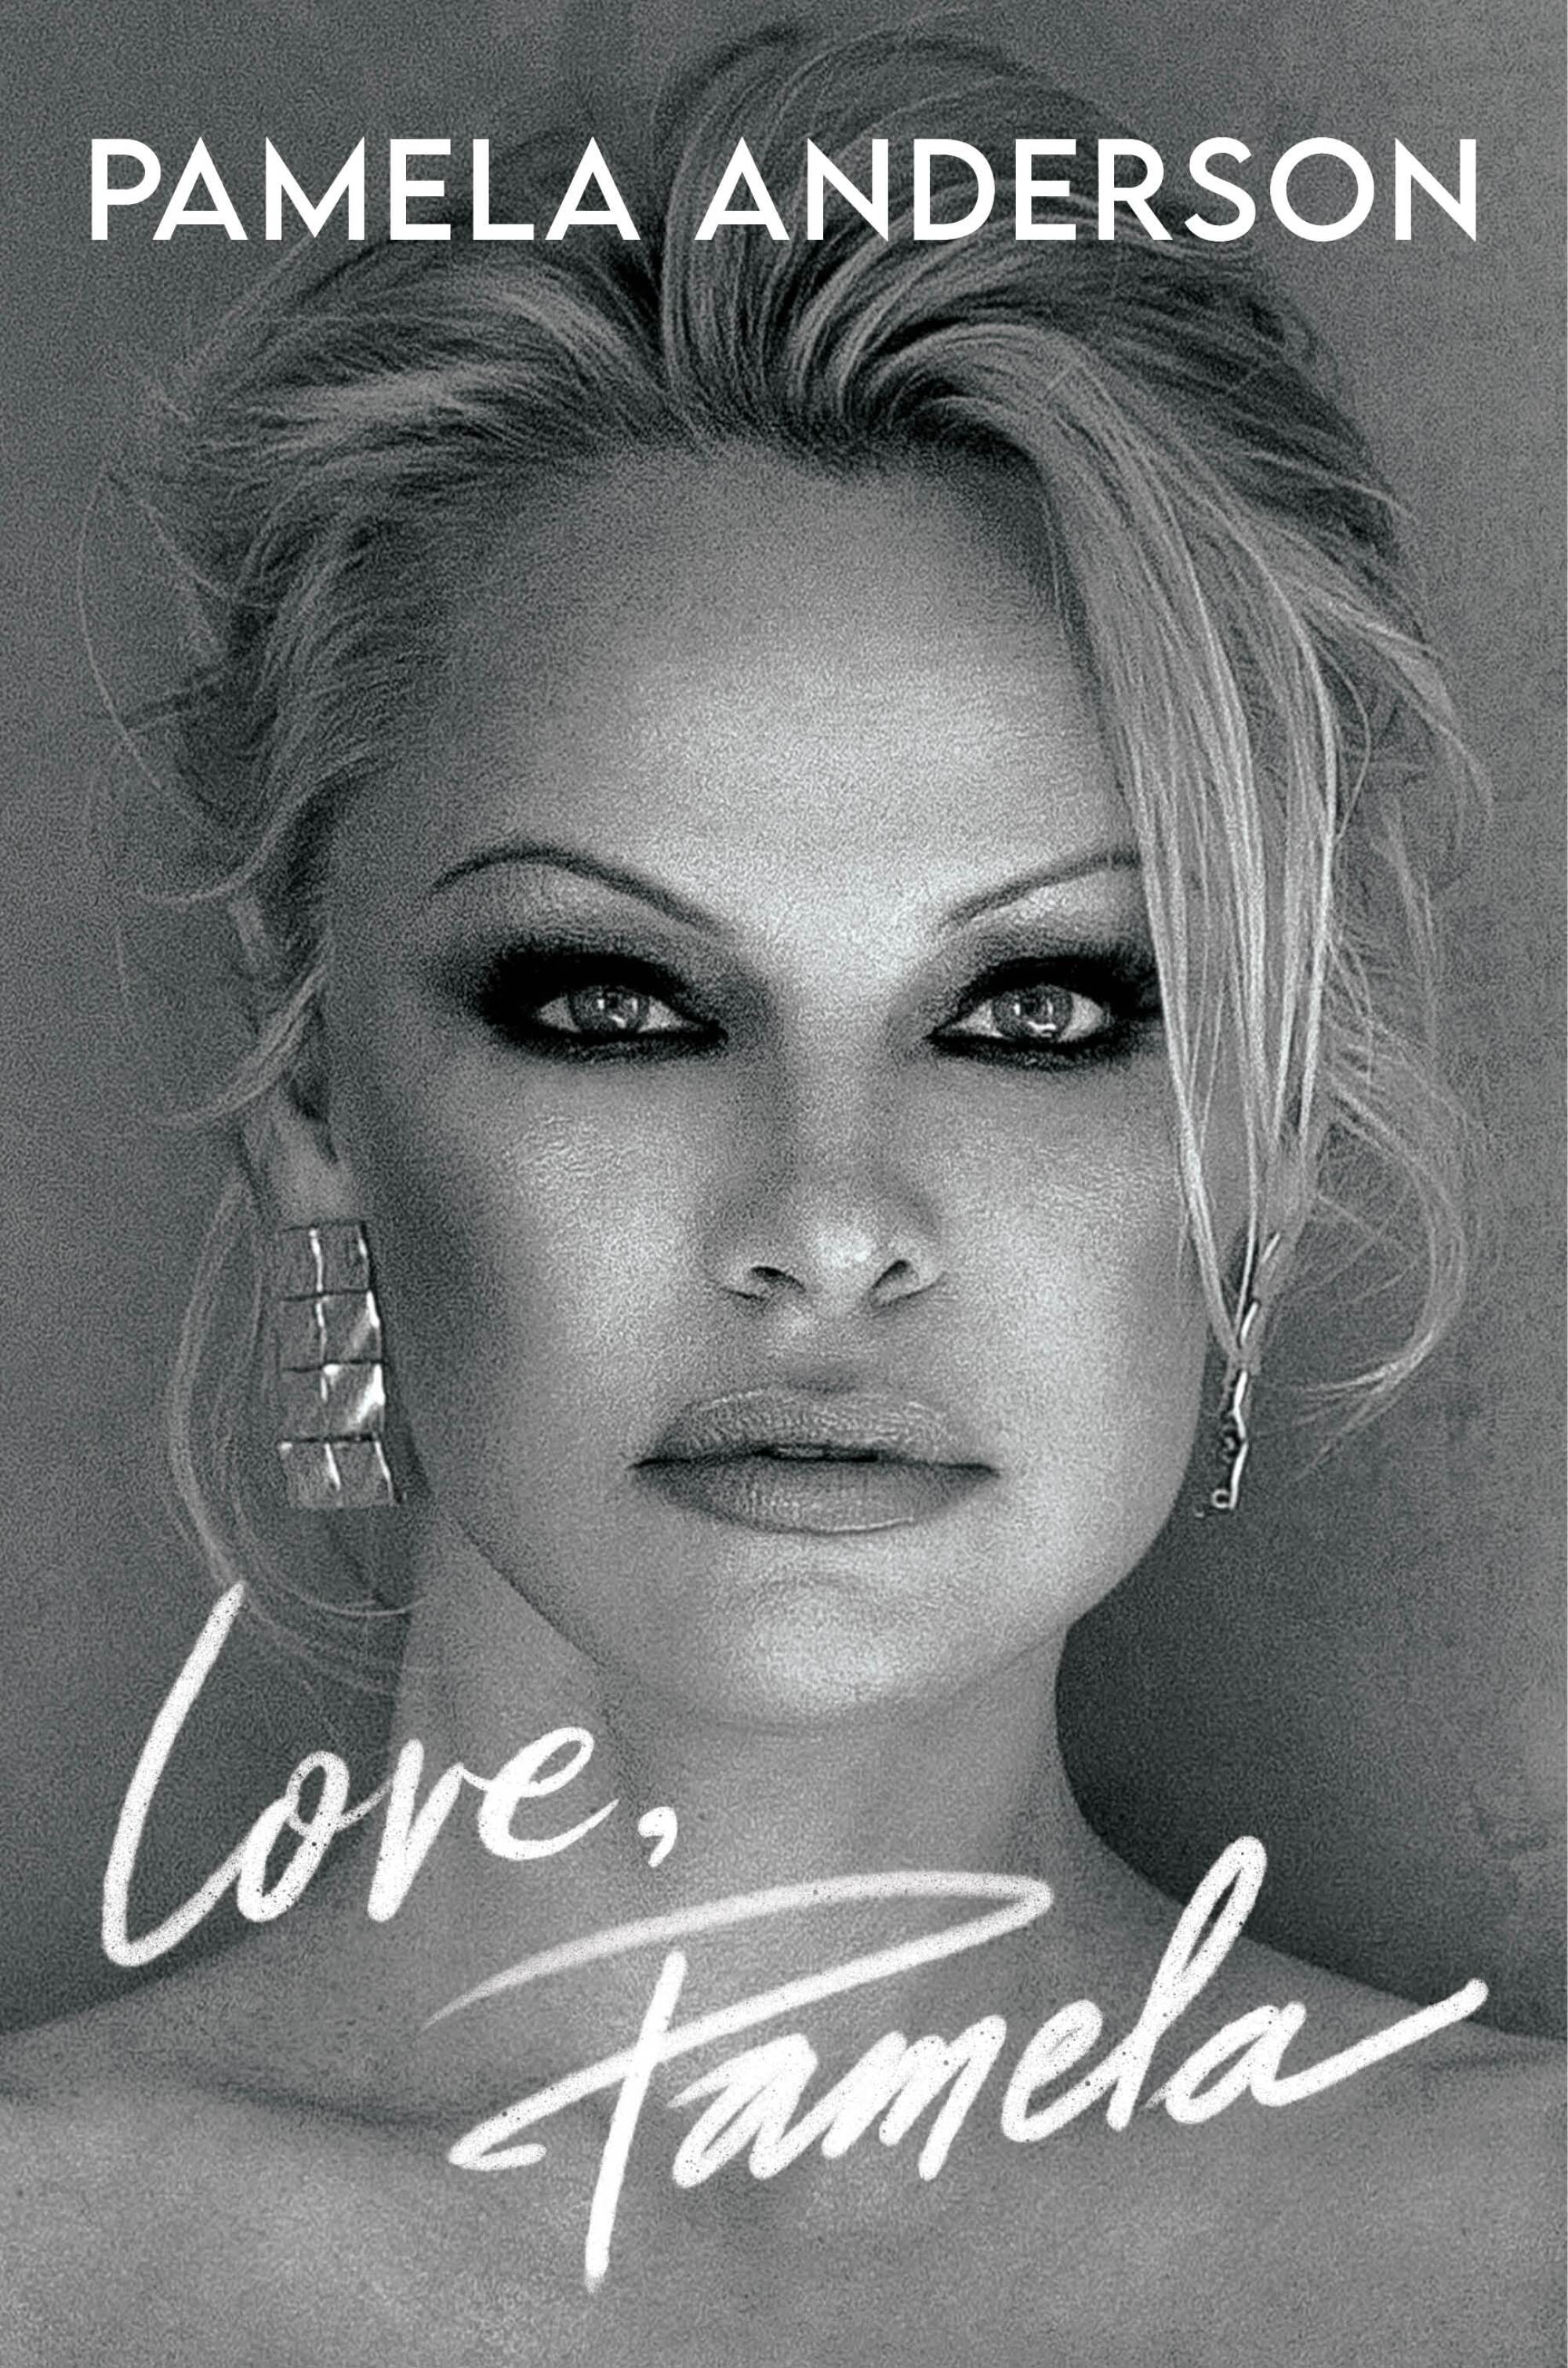 "Love, Pamela," by Pamela Anderson